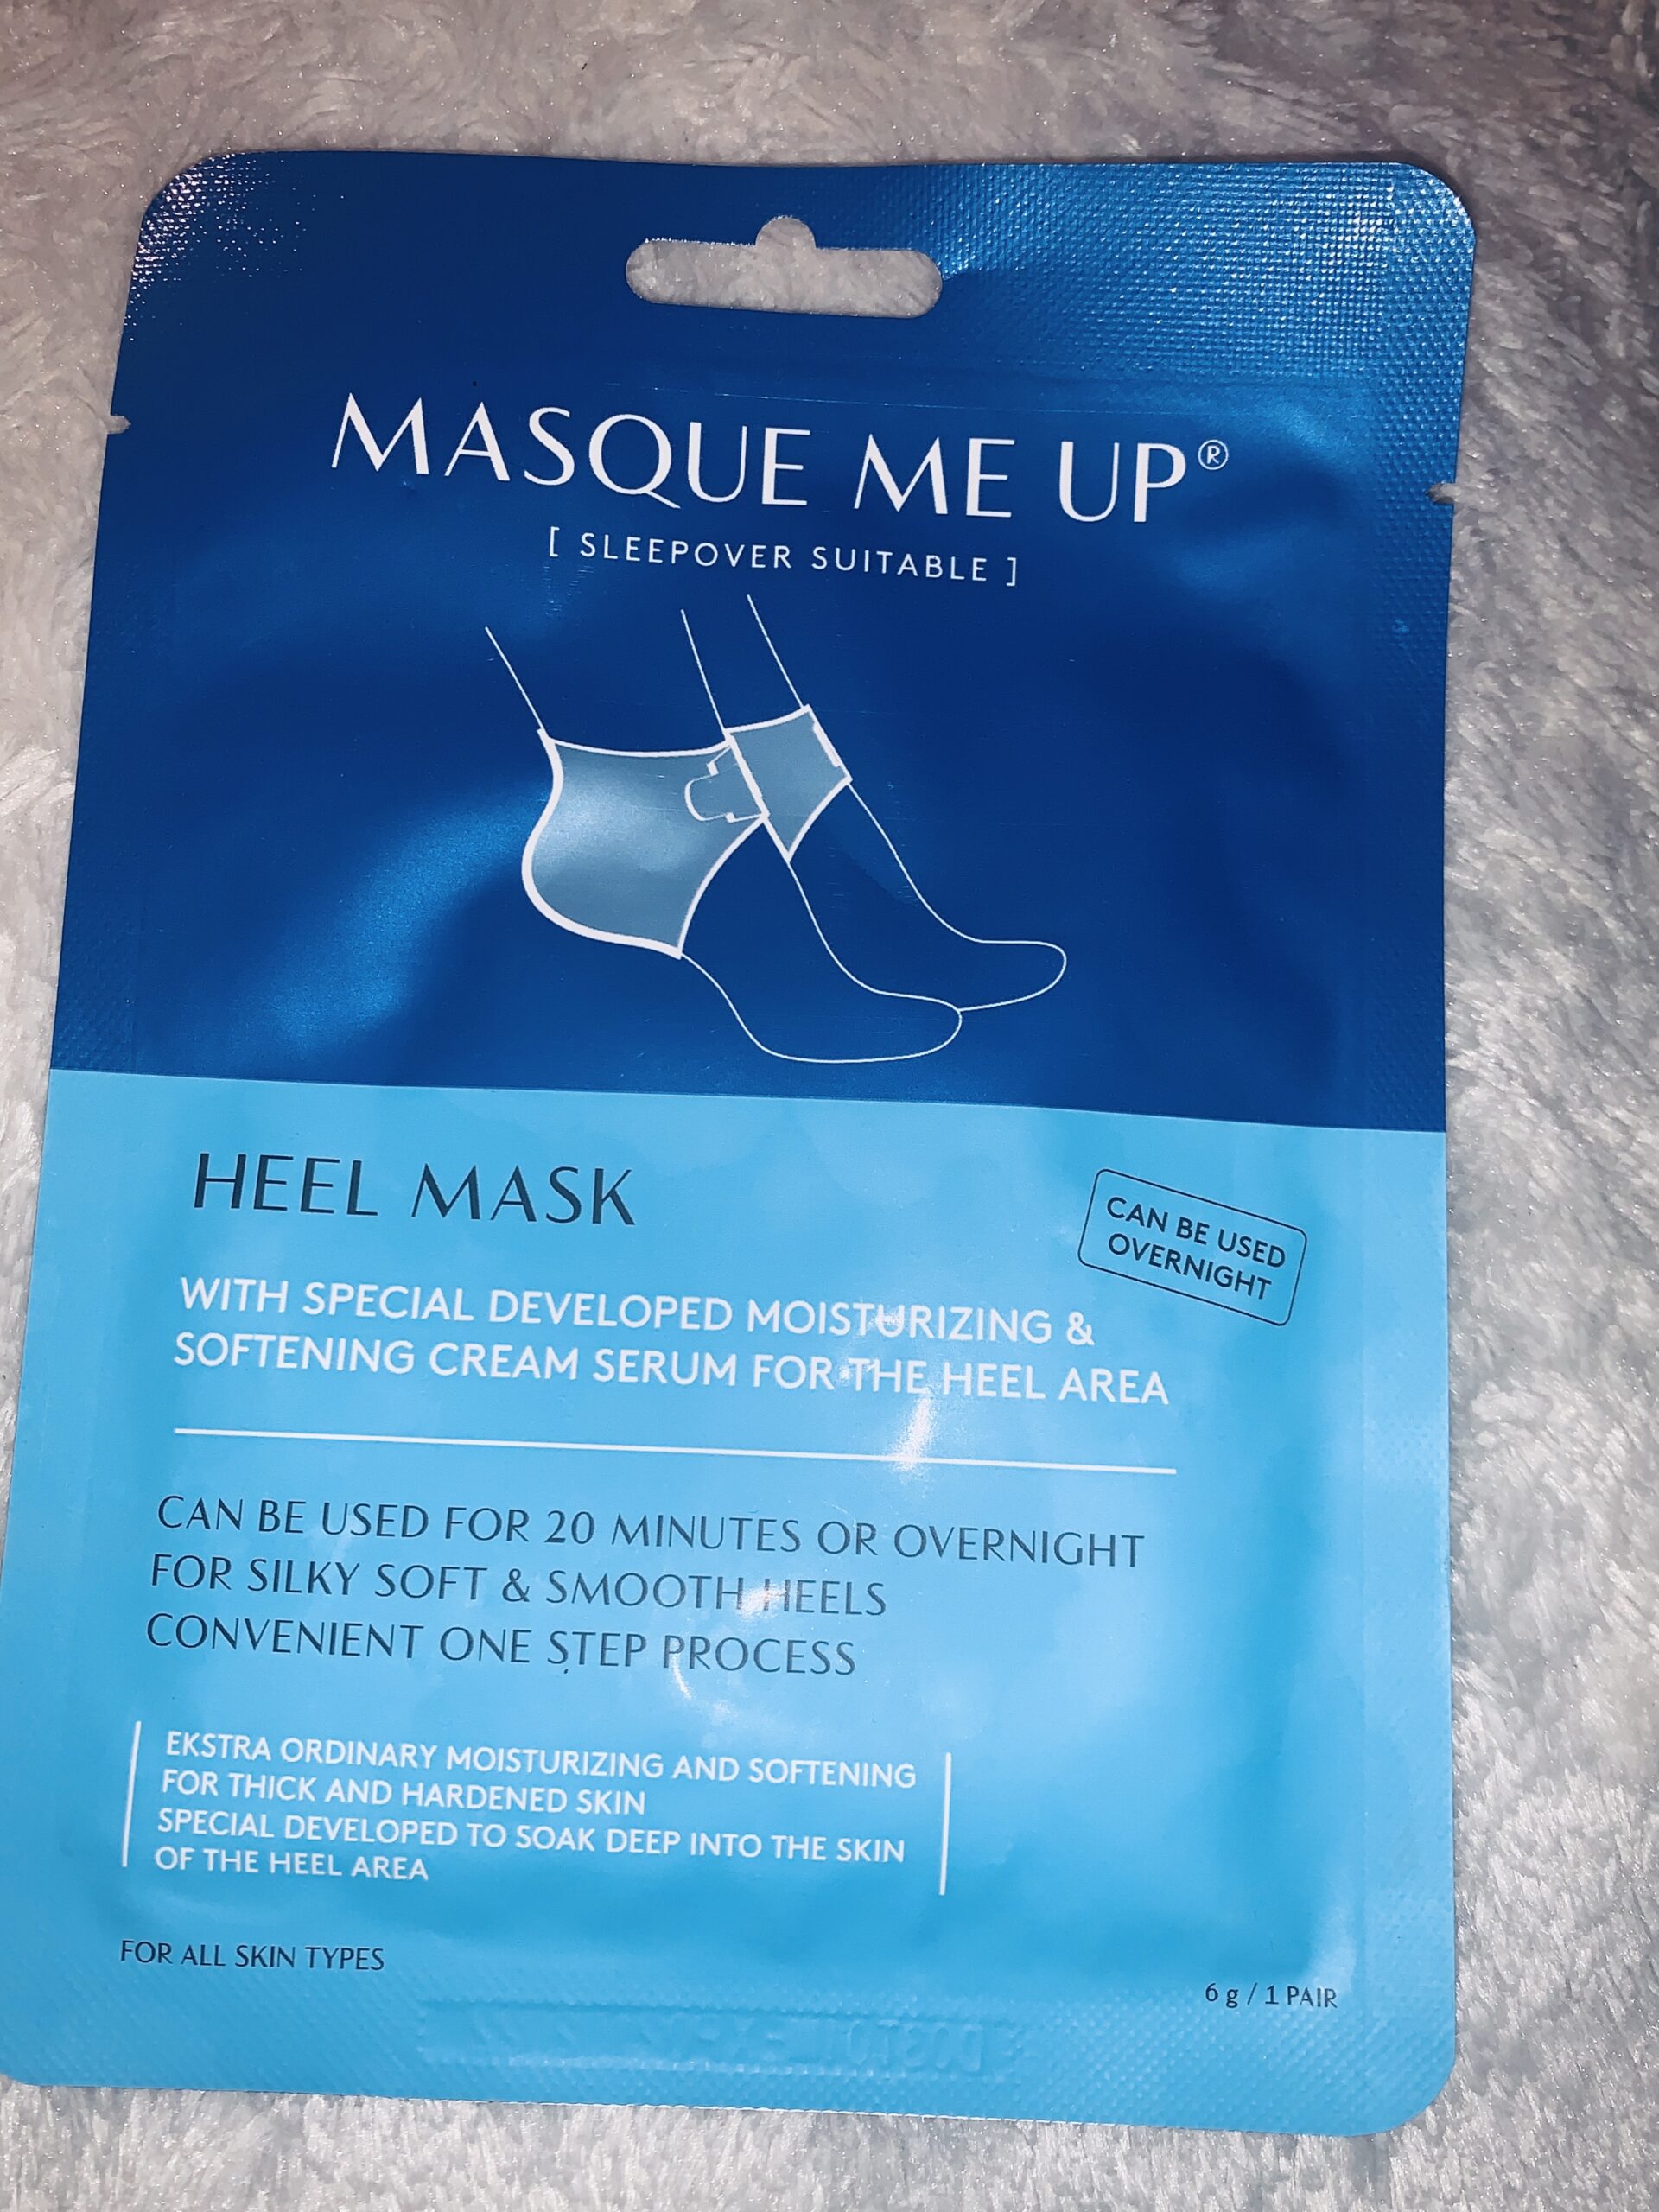 Masque me up heel mask